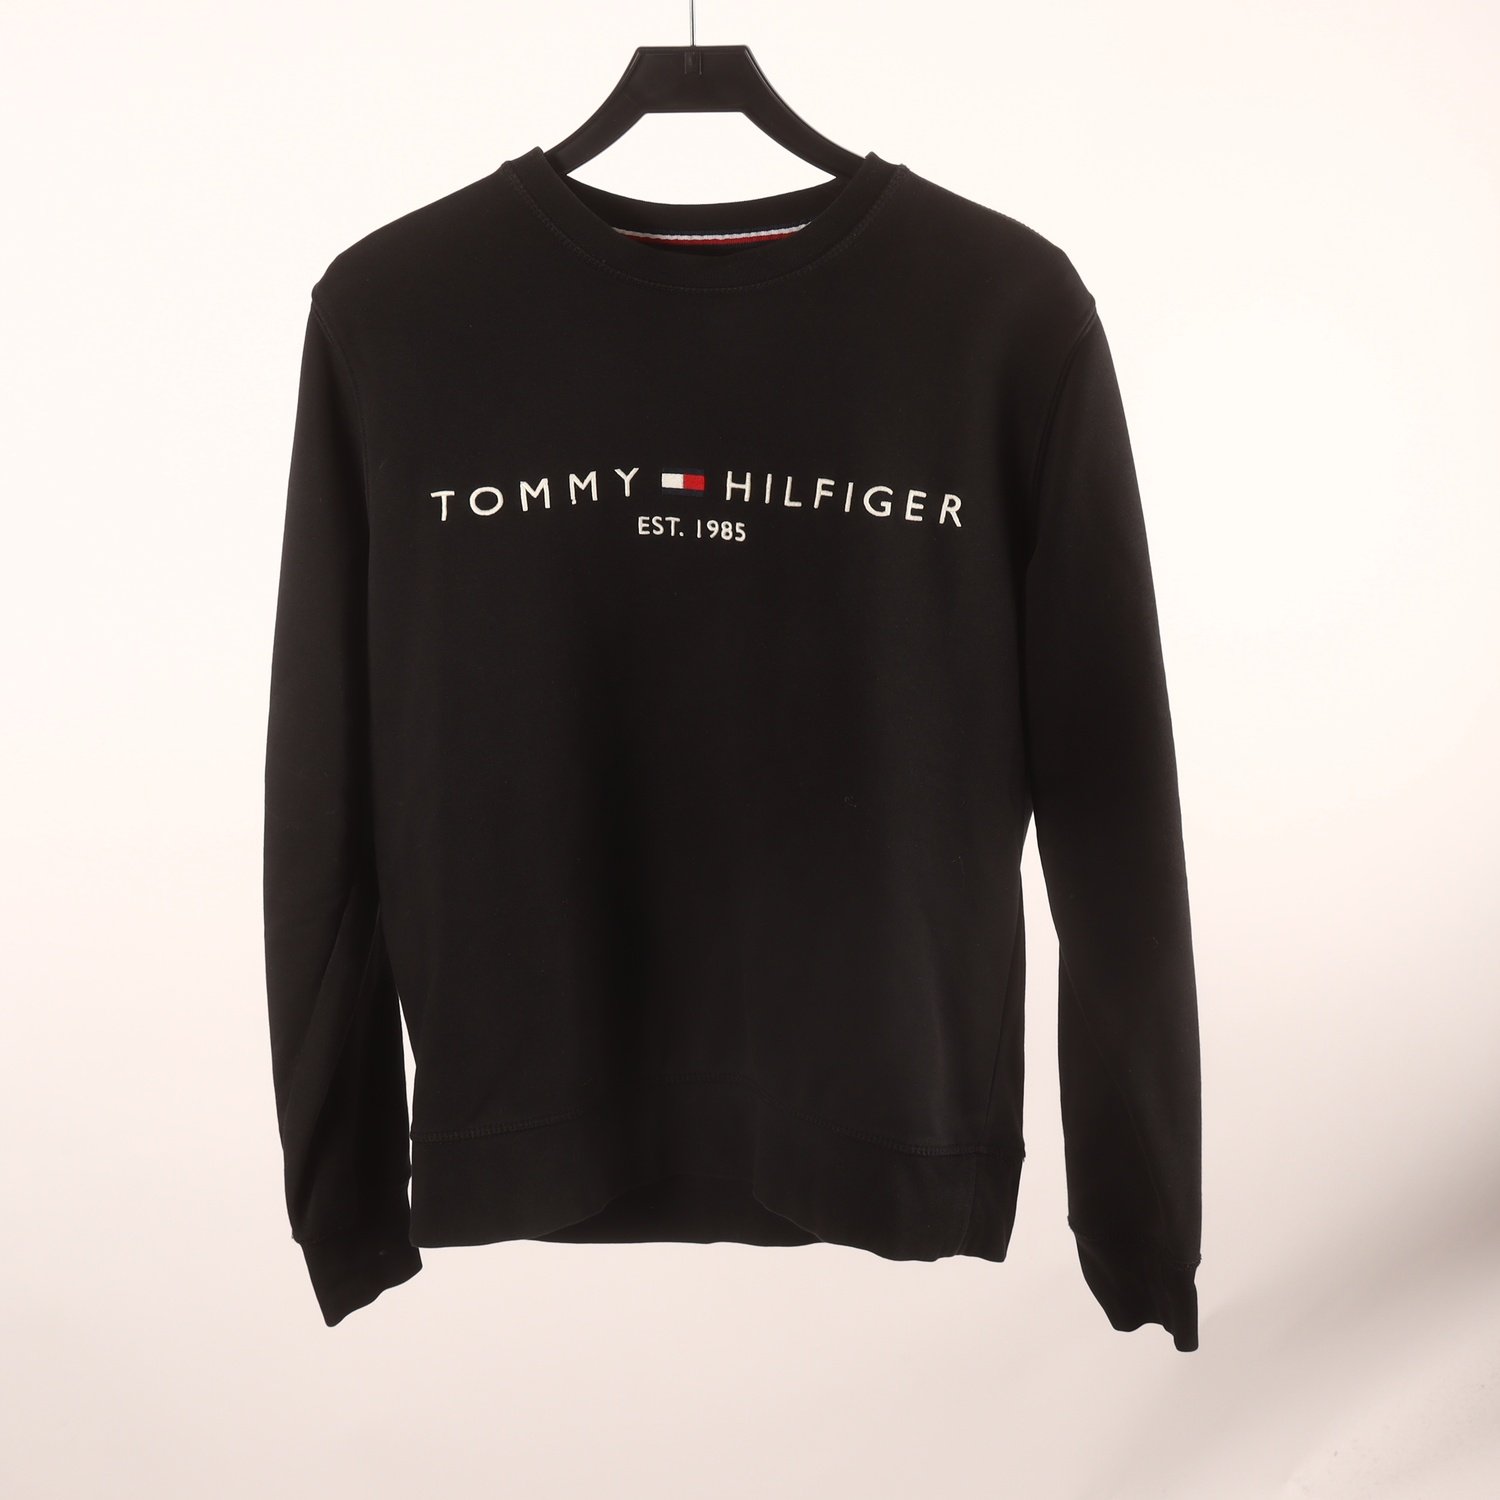 Sweatshirt, Tommy Hilfiger, svart, stl. M